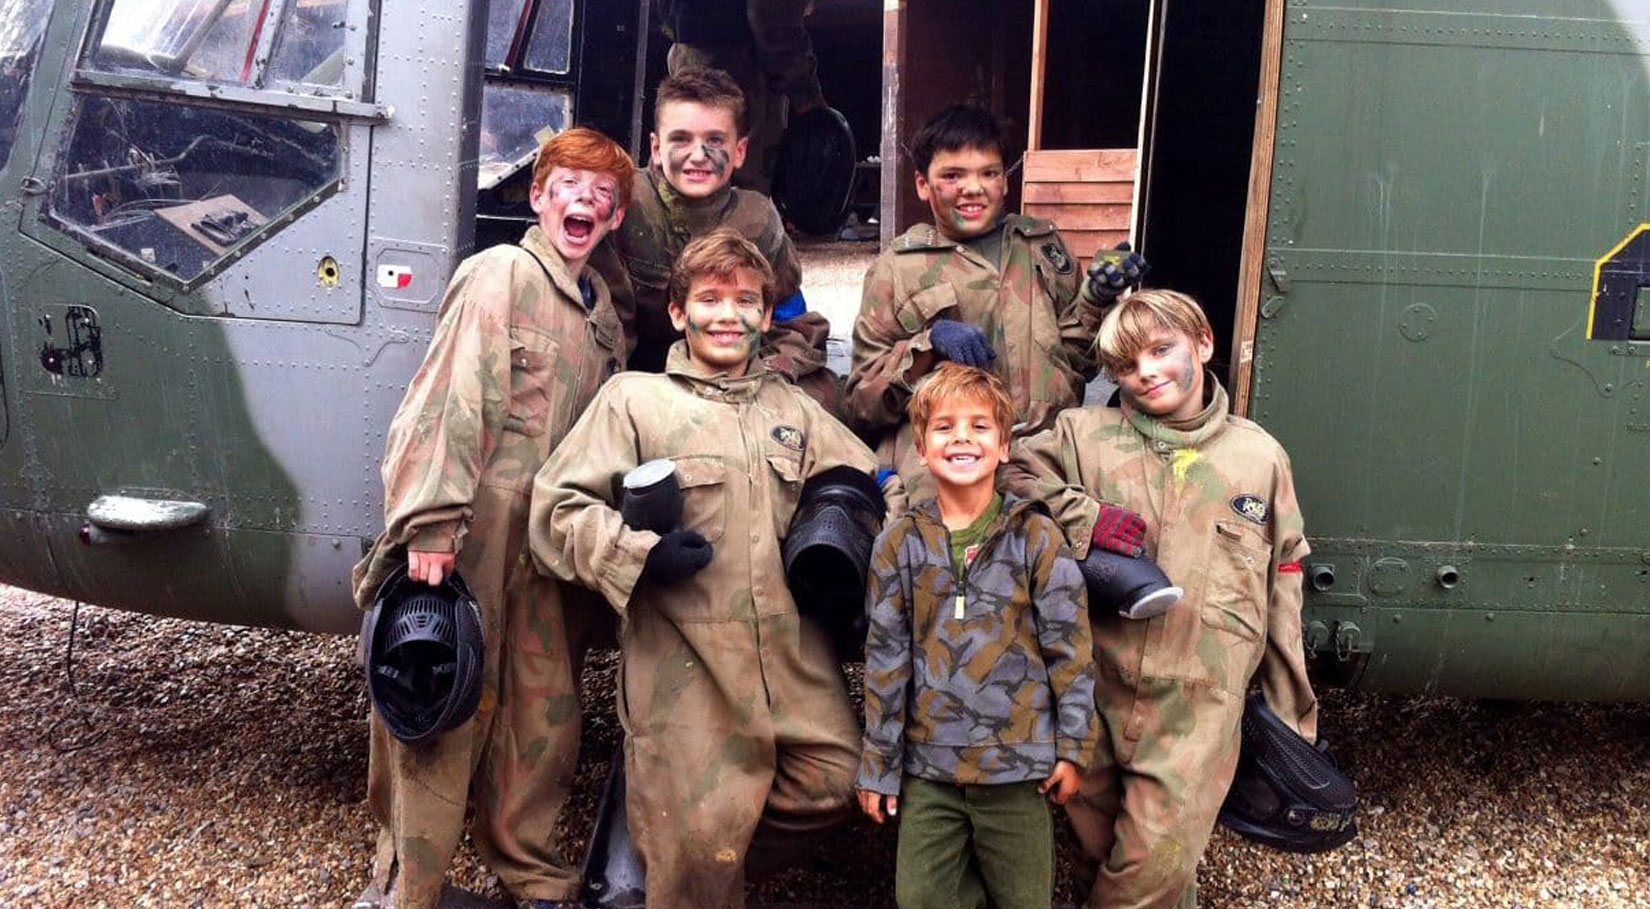 Happy Boys In Delta Force Paintball Uniform